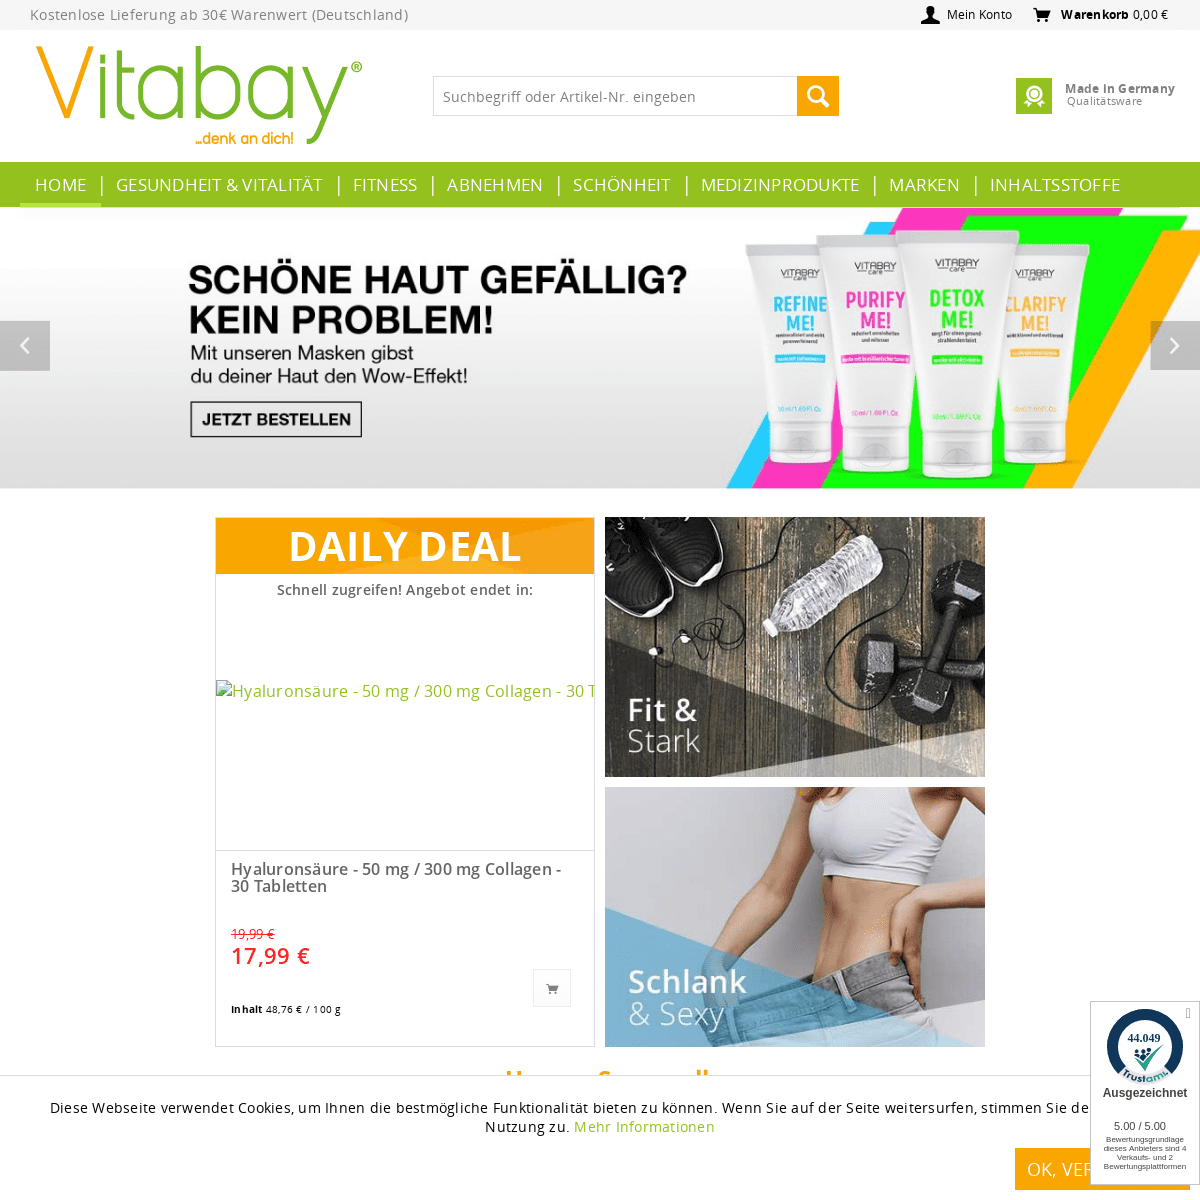 A complete backup of vitabay.net